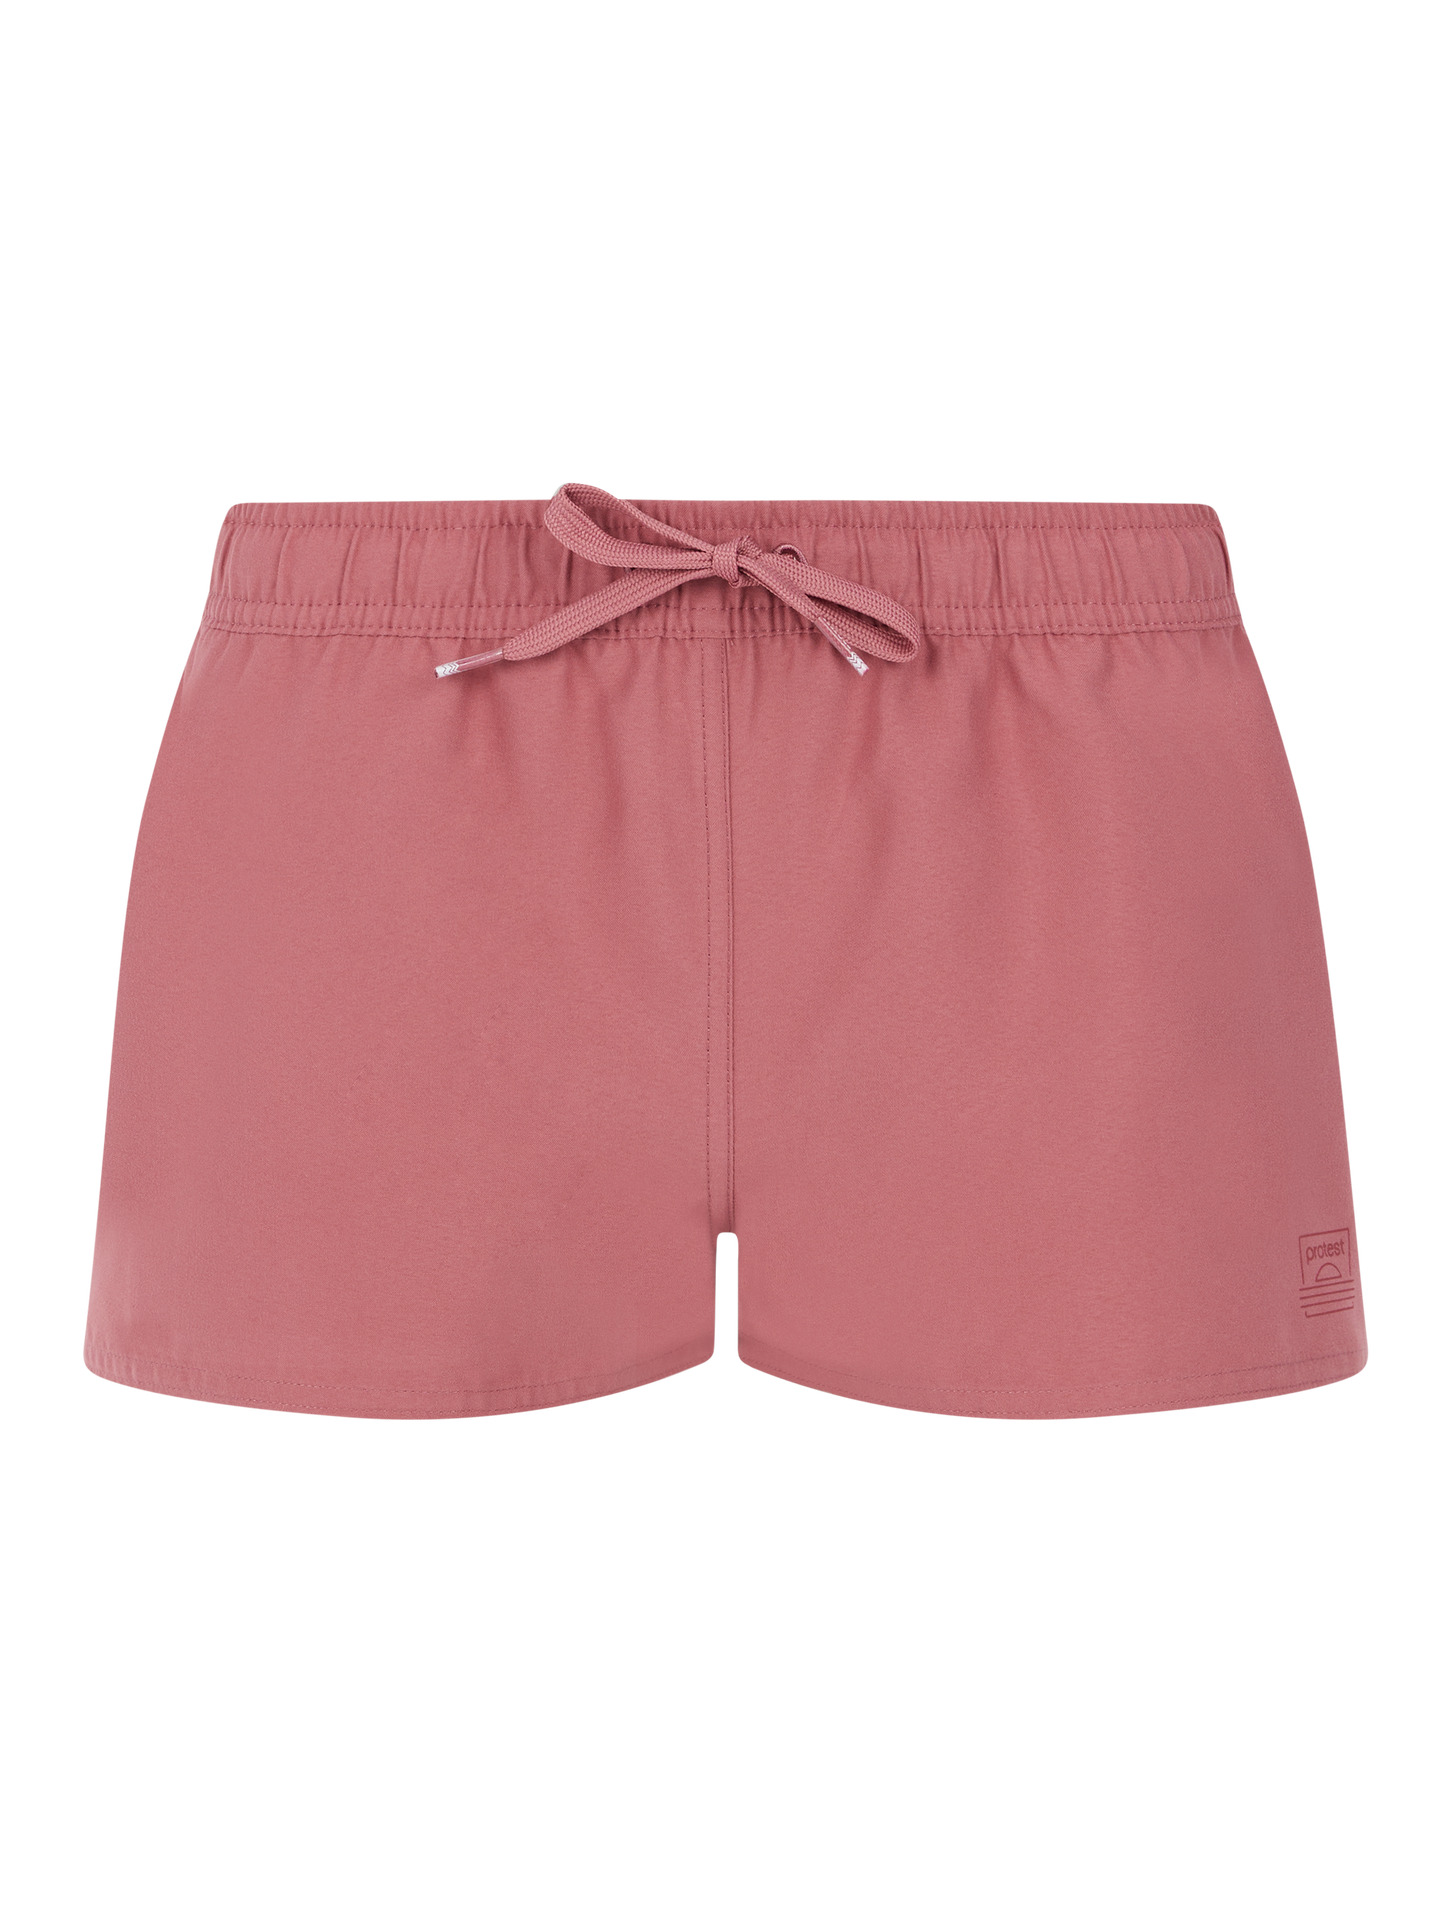 Protest Evi Swim Shorts in Deco Pink